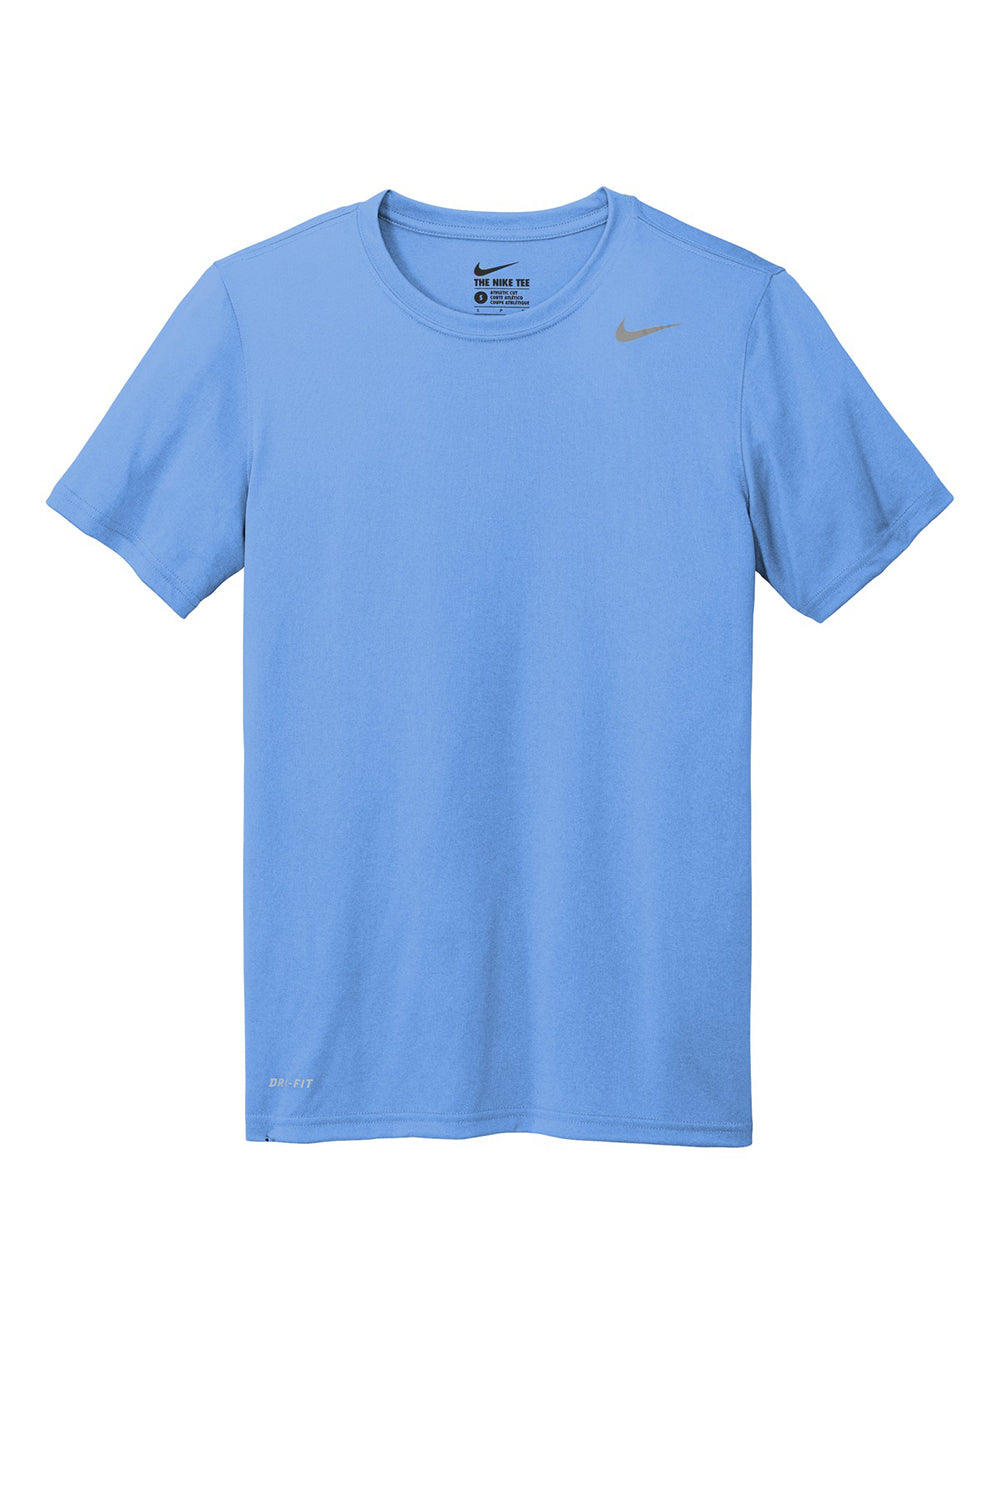 Nike 727982 Mens Legend Dri-Fit Moisture Wicking Short Sleeve Crewneck T-Shirt Valor Blue Flat Front